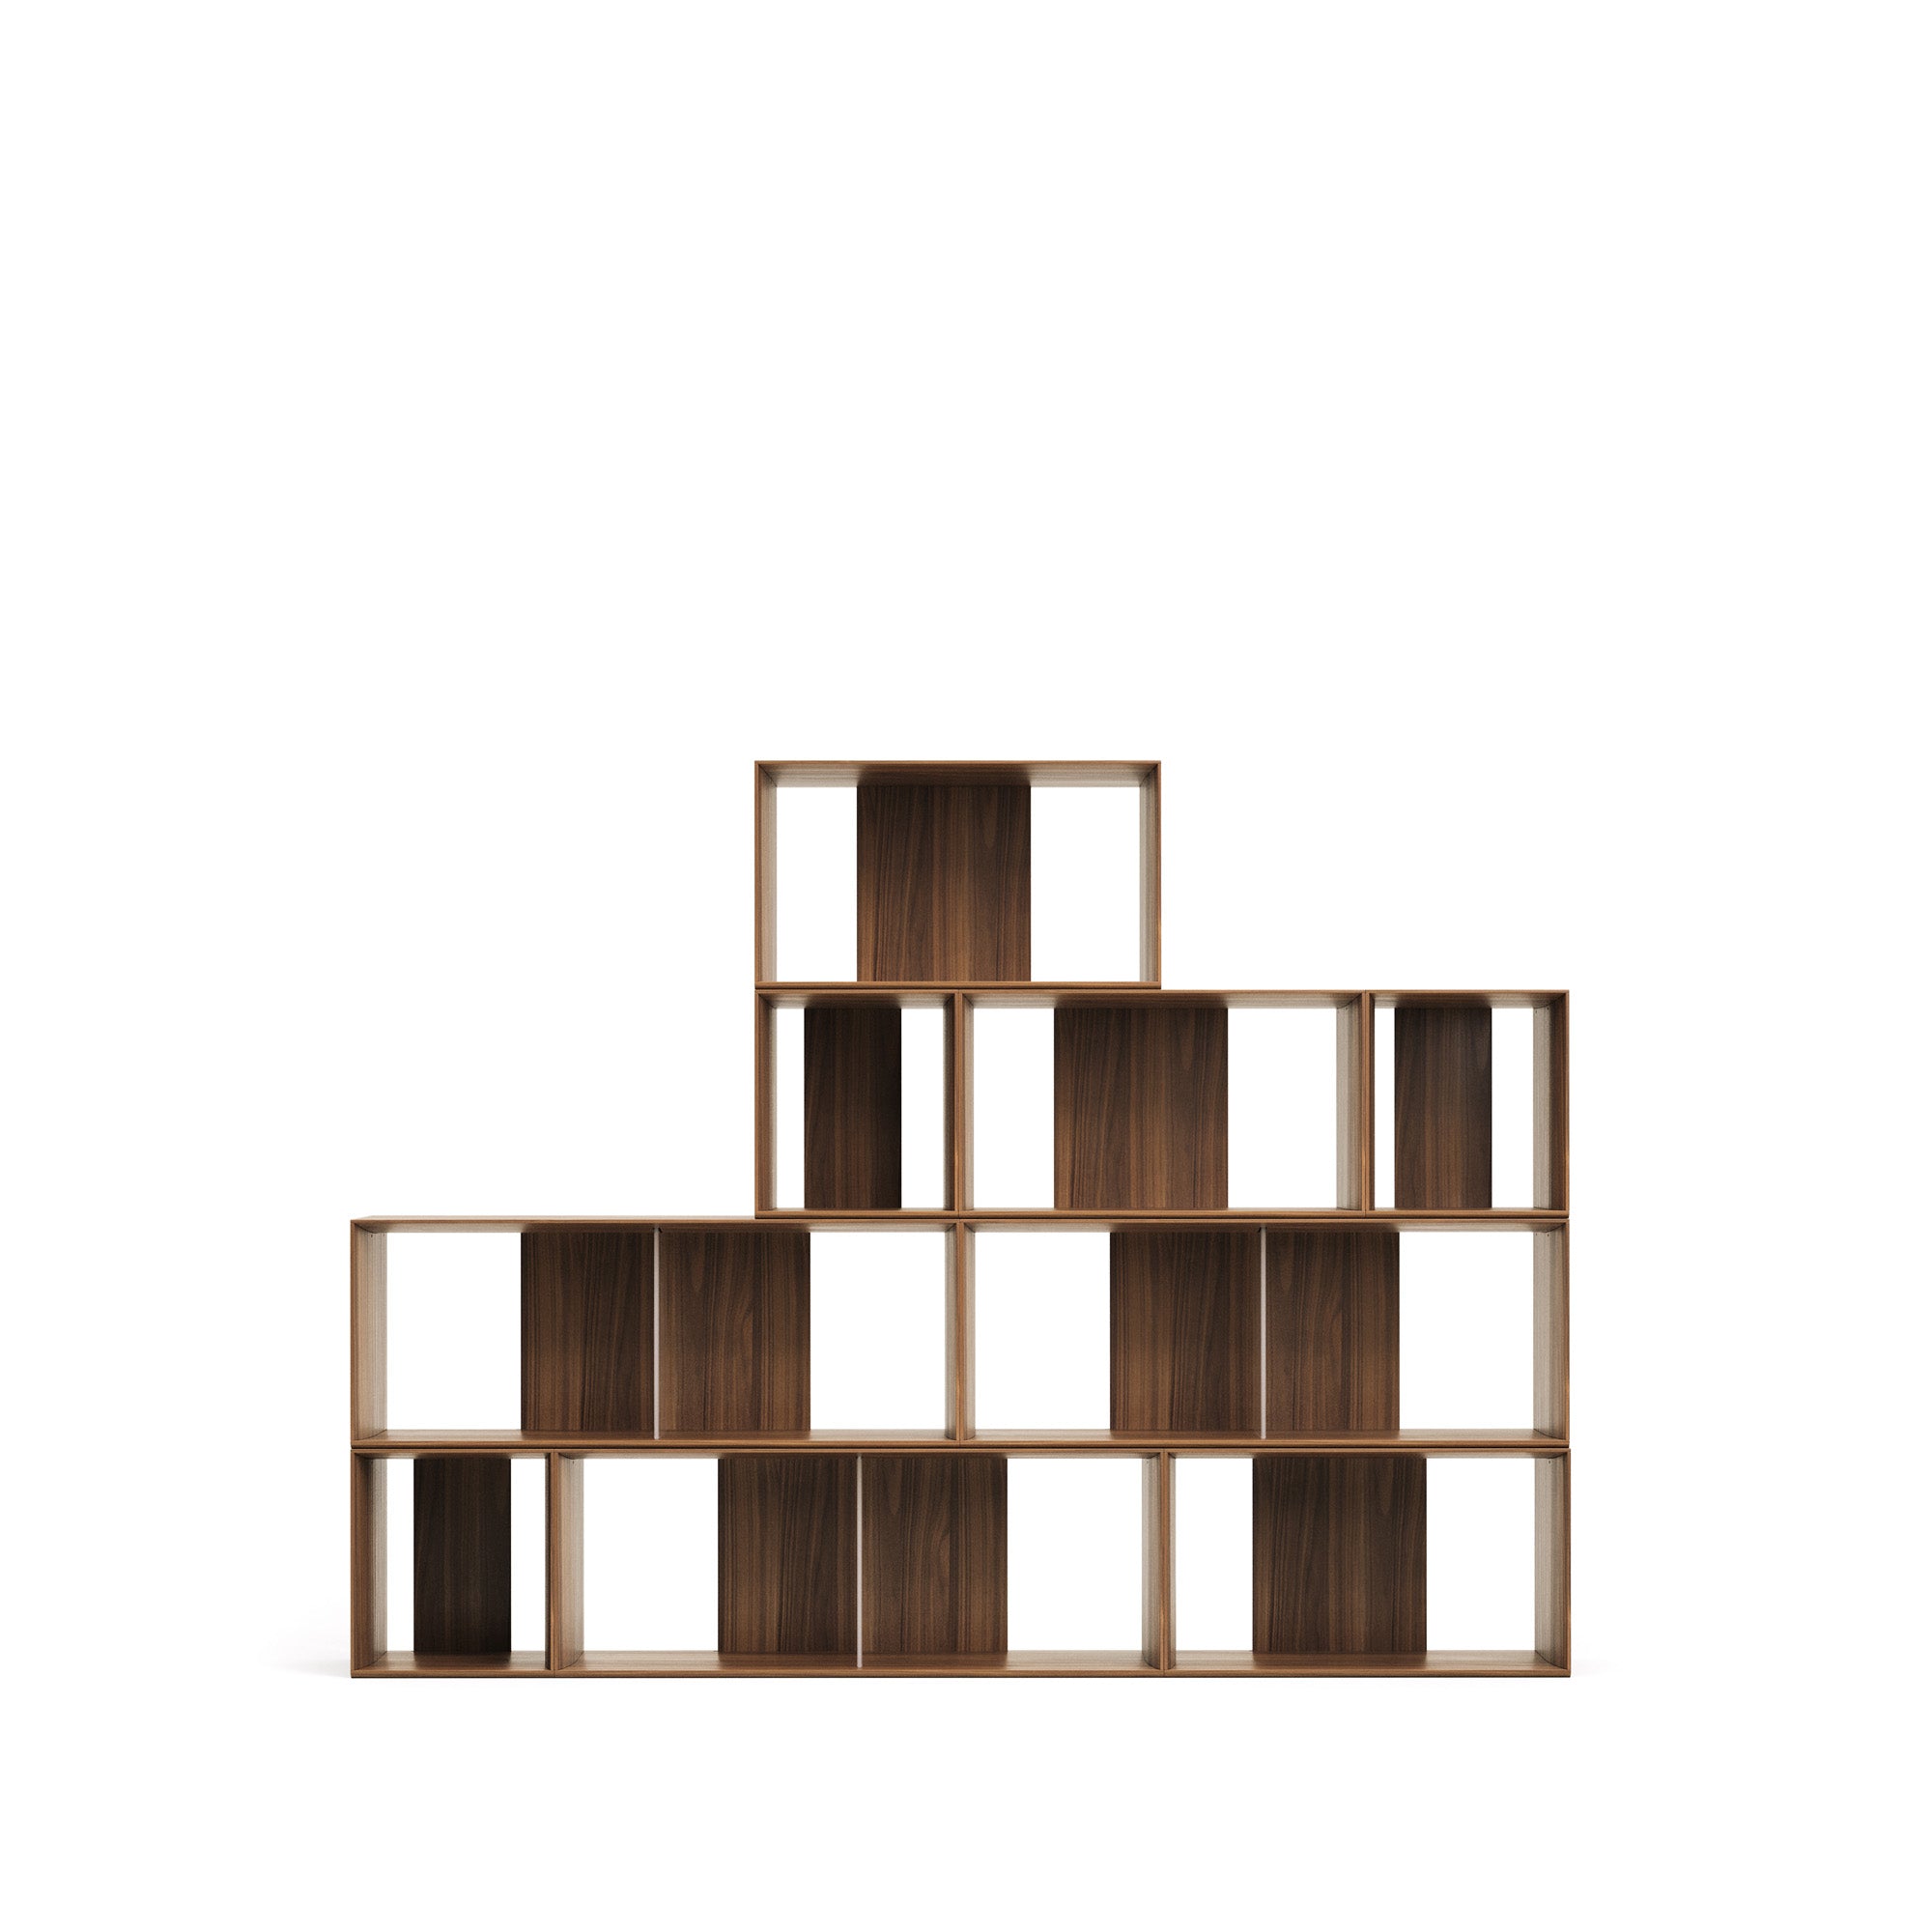 Litto set of 9 modular shelving units in walnut wood veneer, 202 x 114 cm